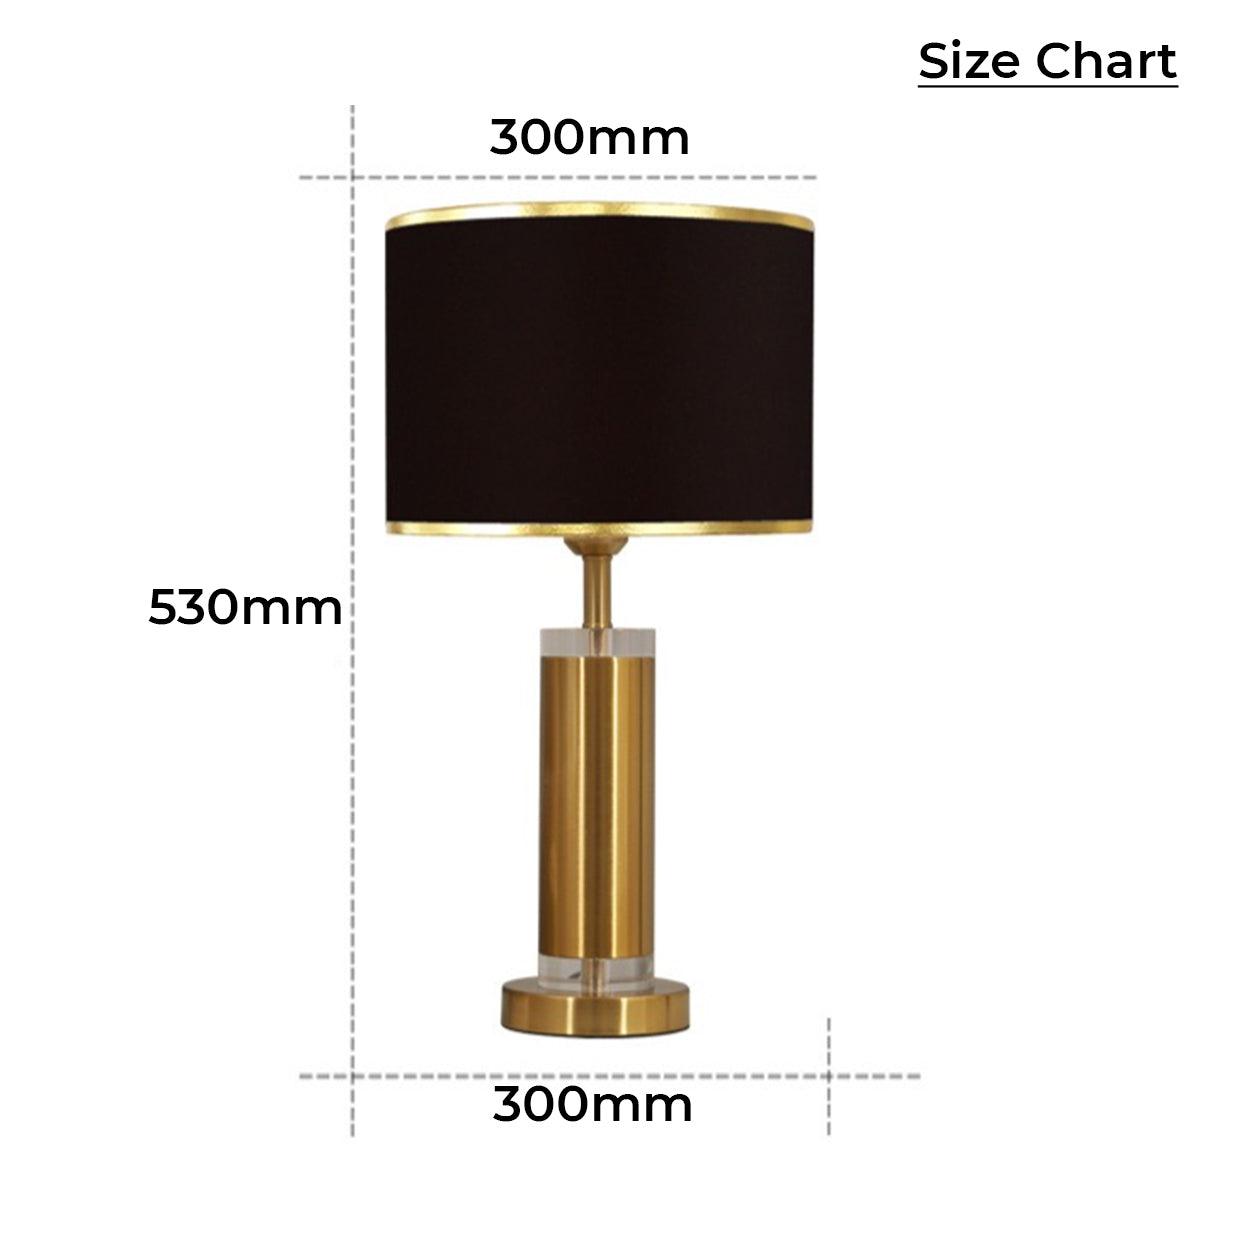 ROBERT LUXURY METAL AND CRYSTAL DESIGNER TABLE LAMP BEDSIDE LAMP - Ankur Lighting